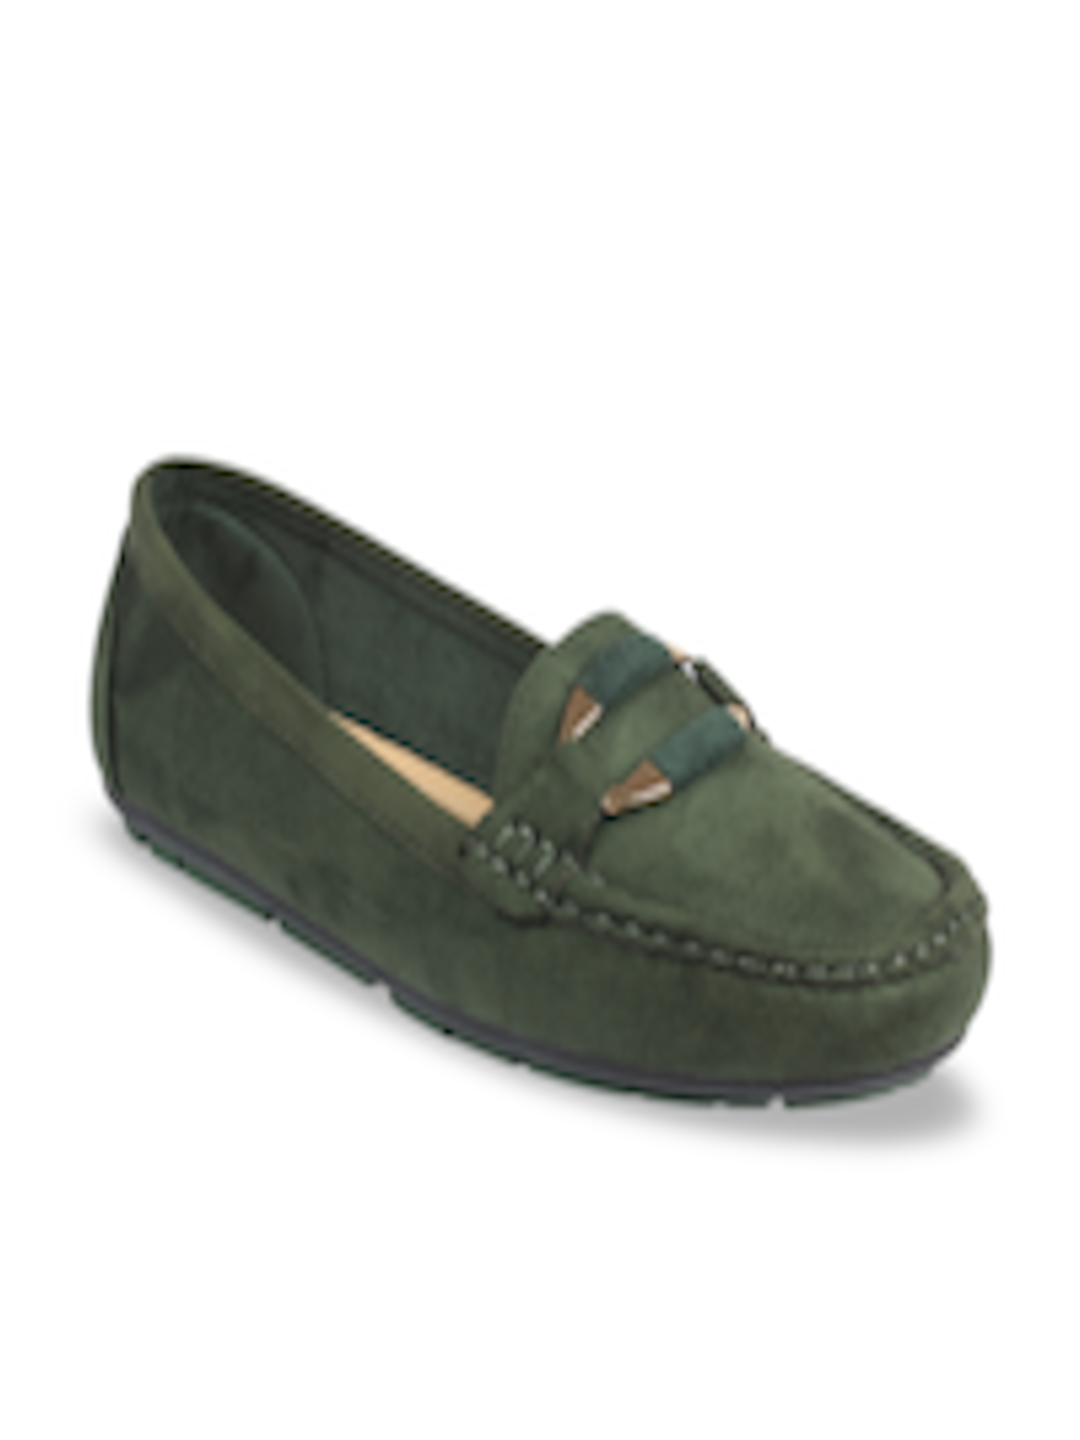 Buy Flat N Heels Women Green Suede Loafers - Casual Shoes for Women ...